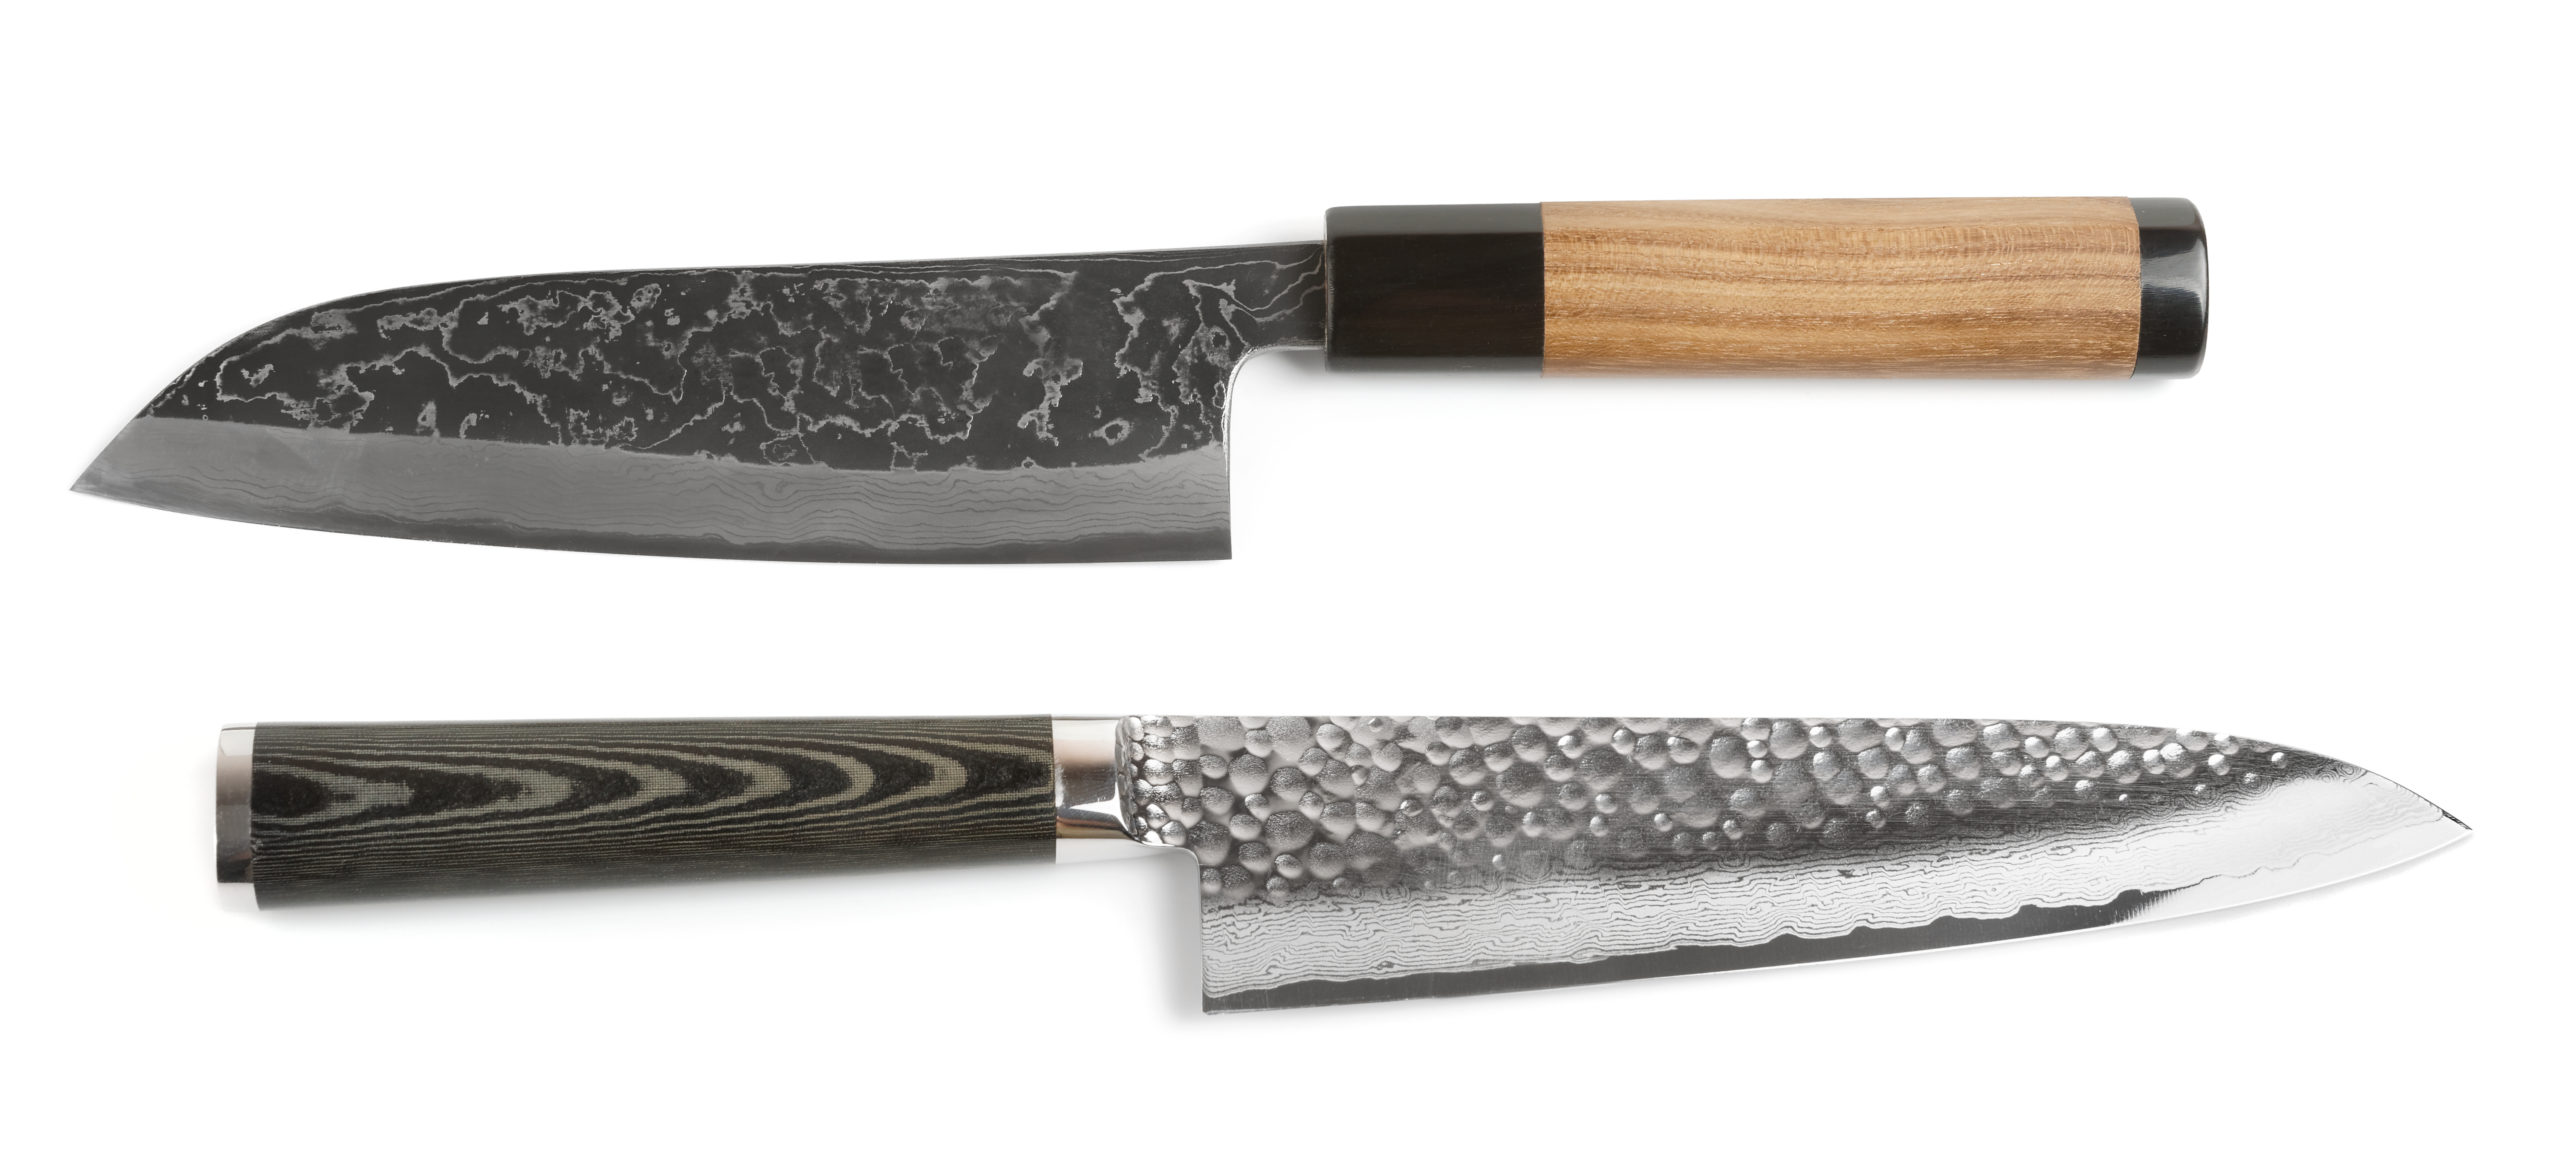 Japanese_chef_knife